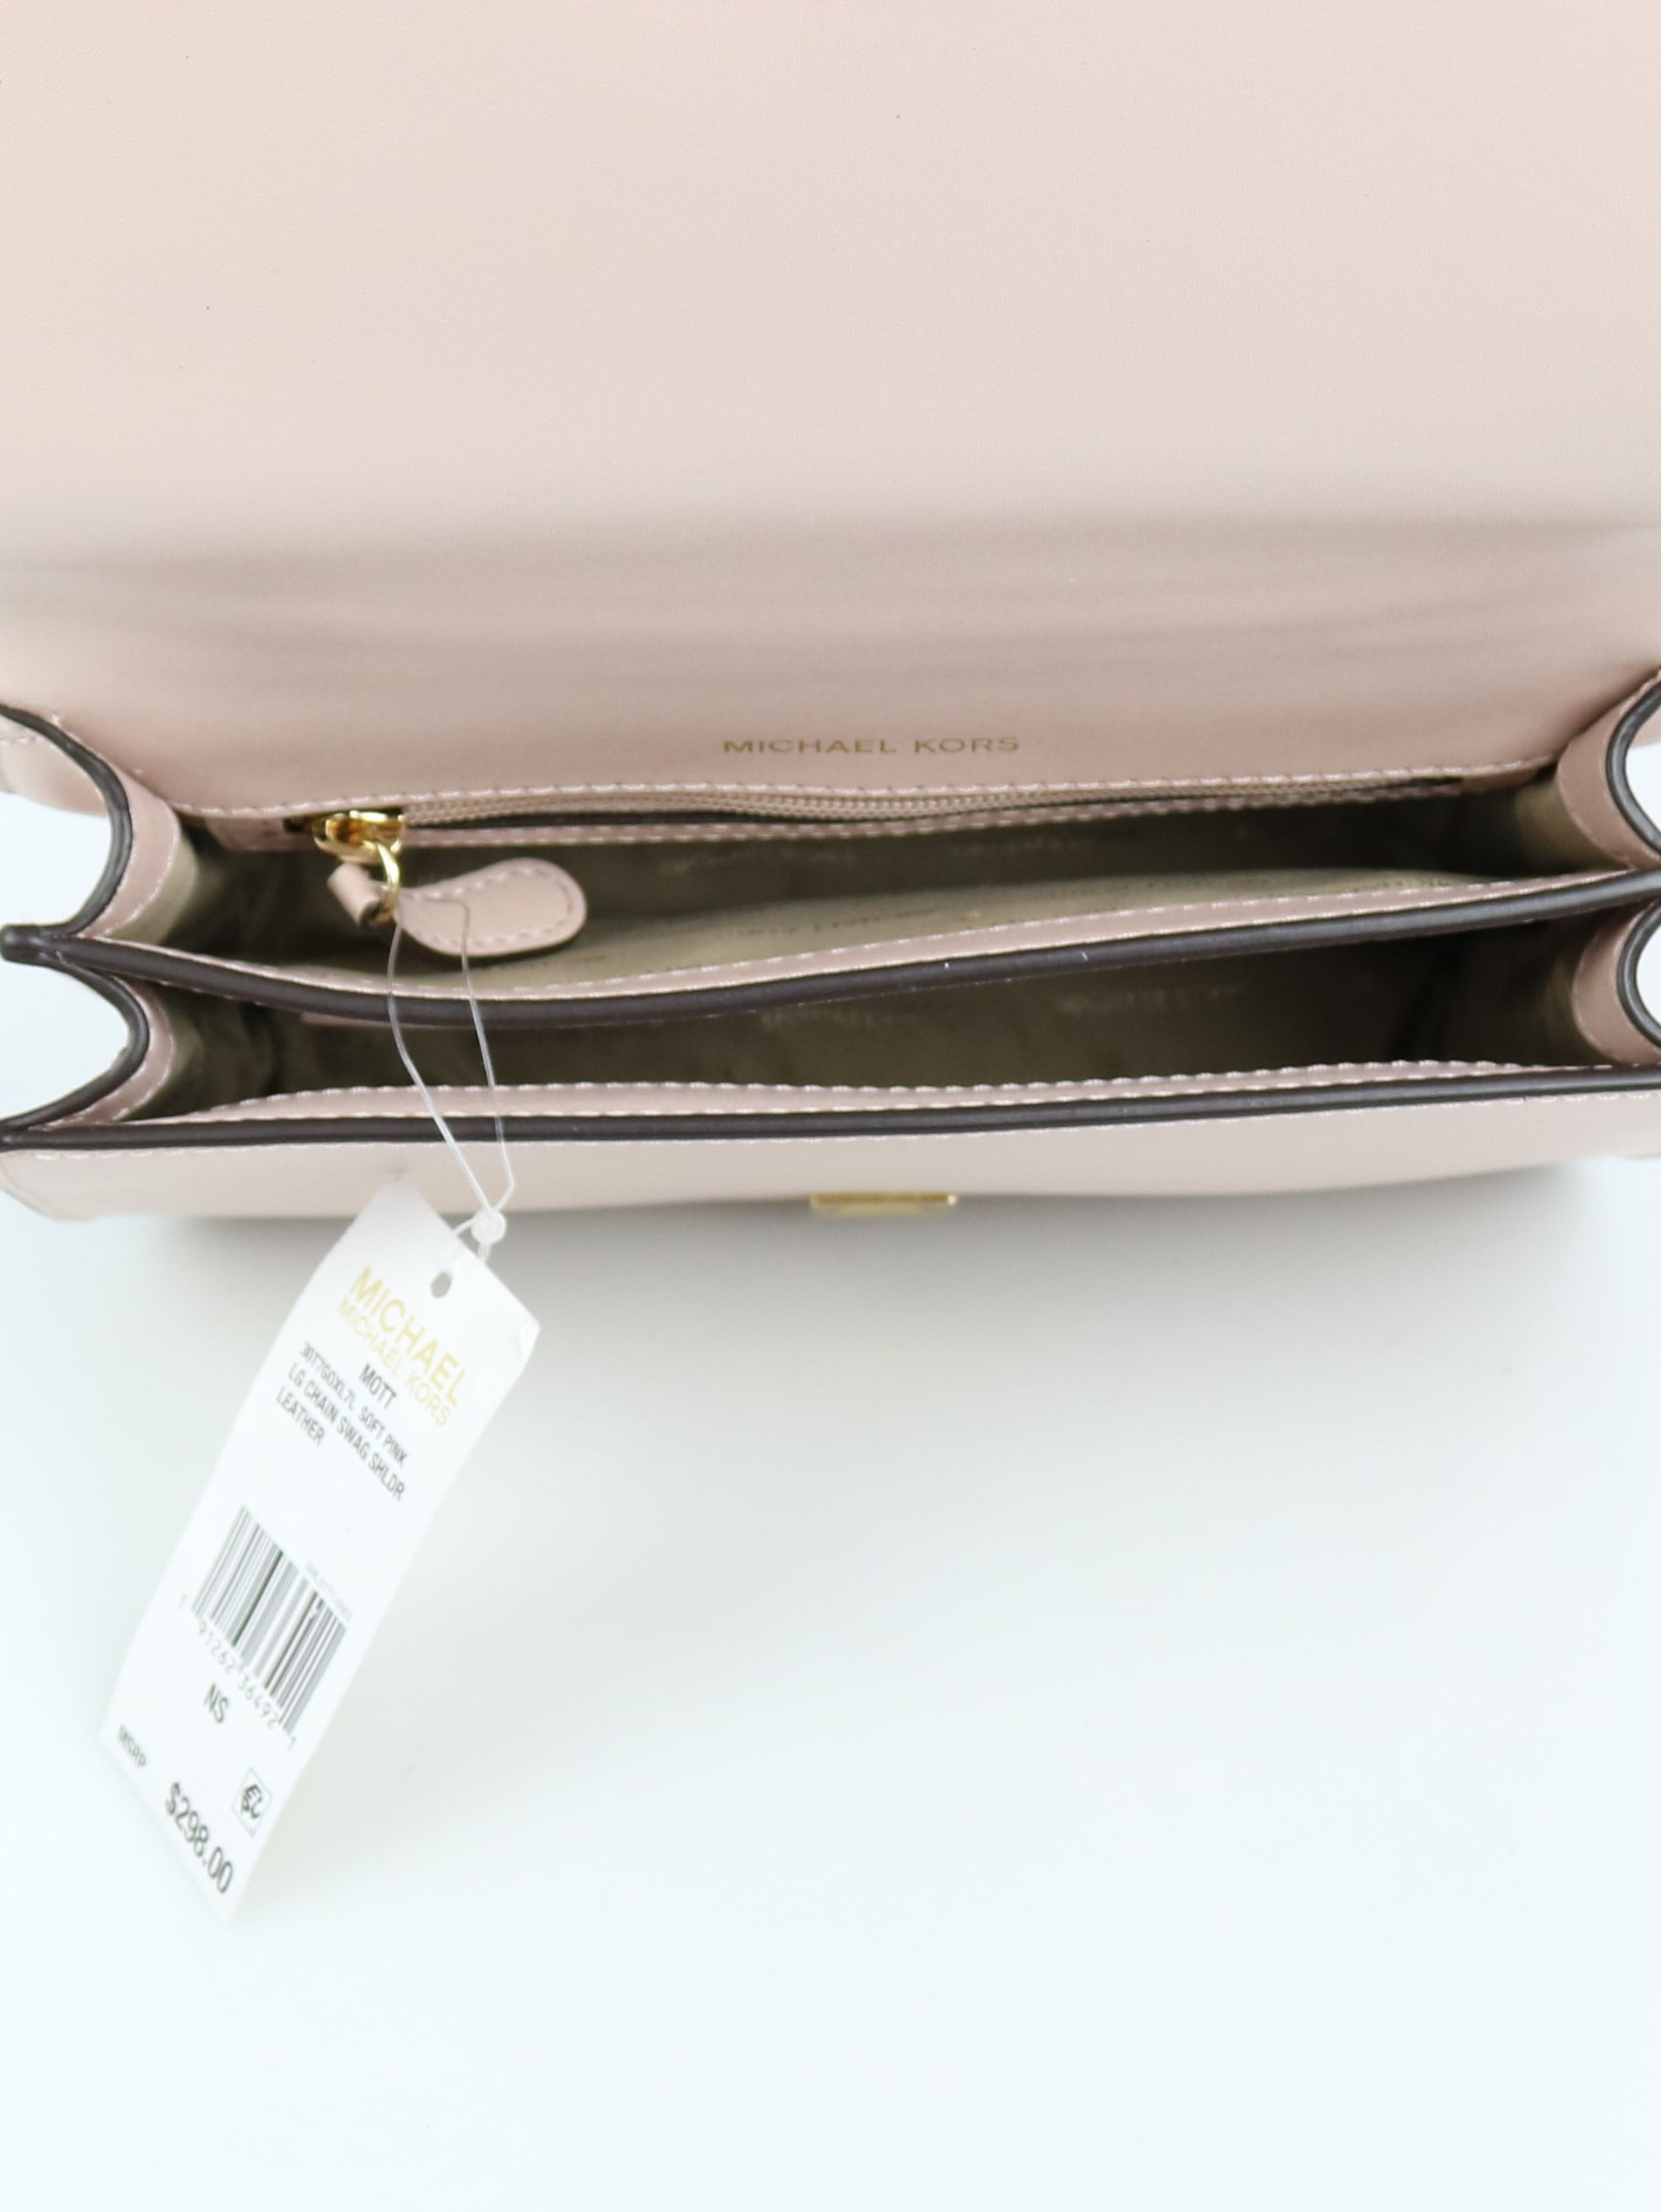 MICHAEL Michael Kors Mott Large Chain Swag Shoulder Soft Pink One Size:  Handbags